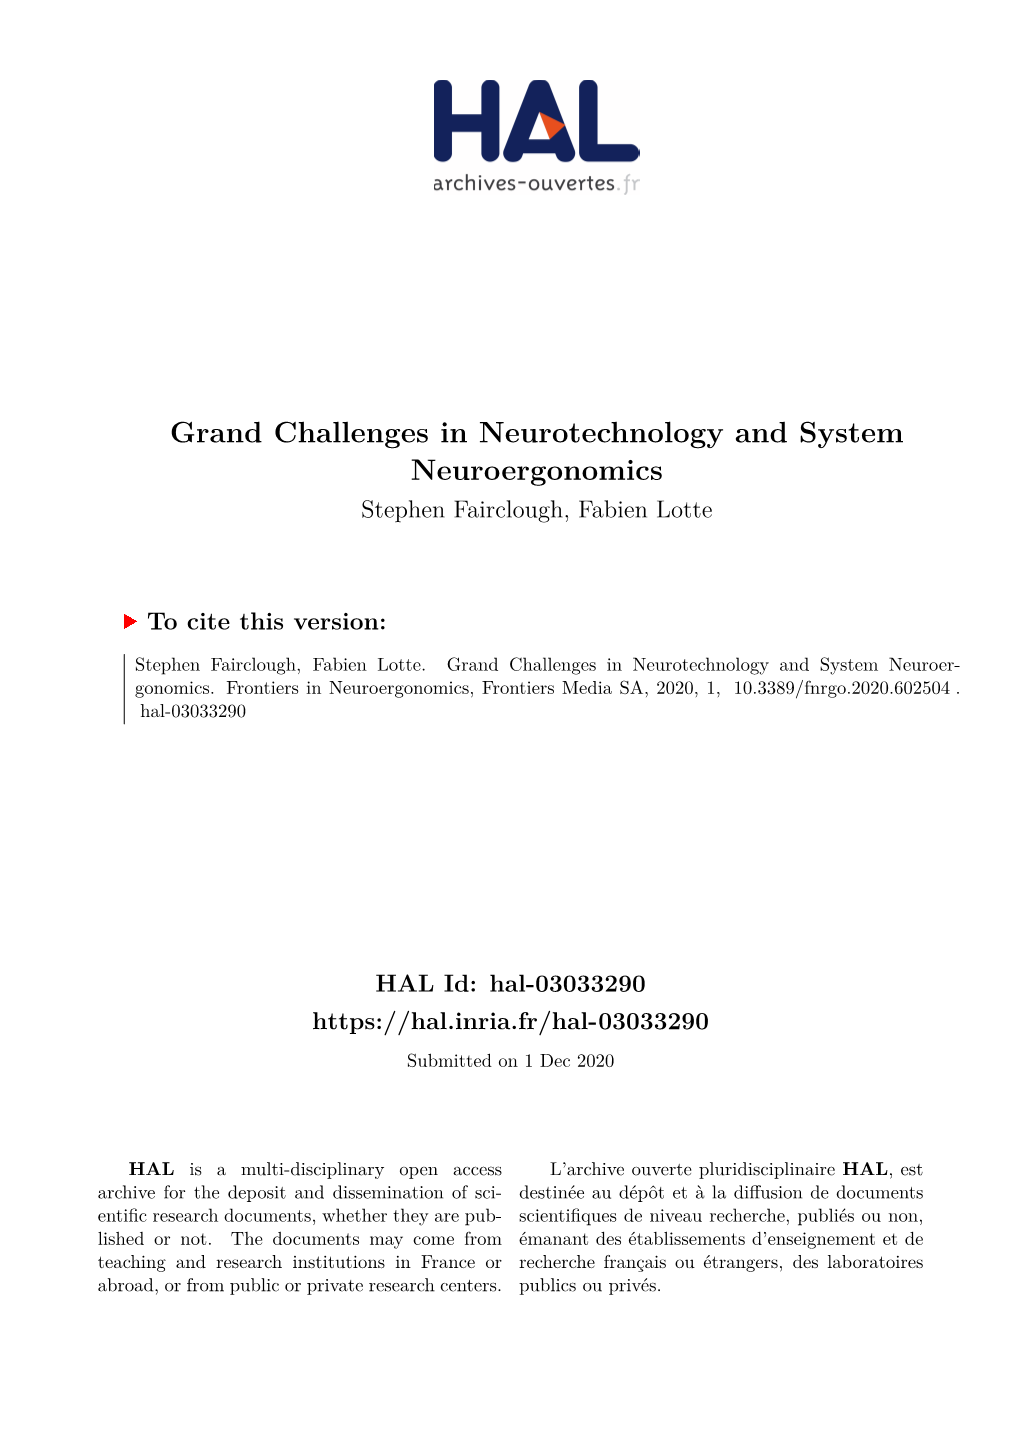 Grand Challenges in Neurotechnology and System Neuroergonomics Stephen Fairclough, Fabien Lotte